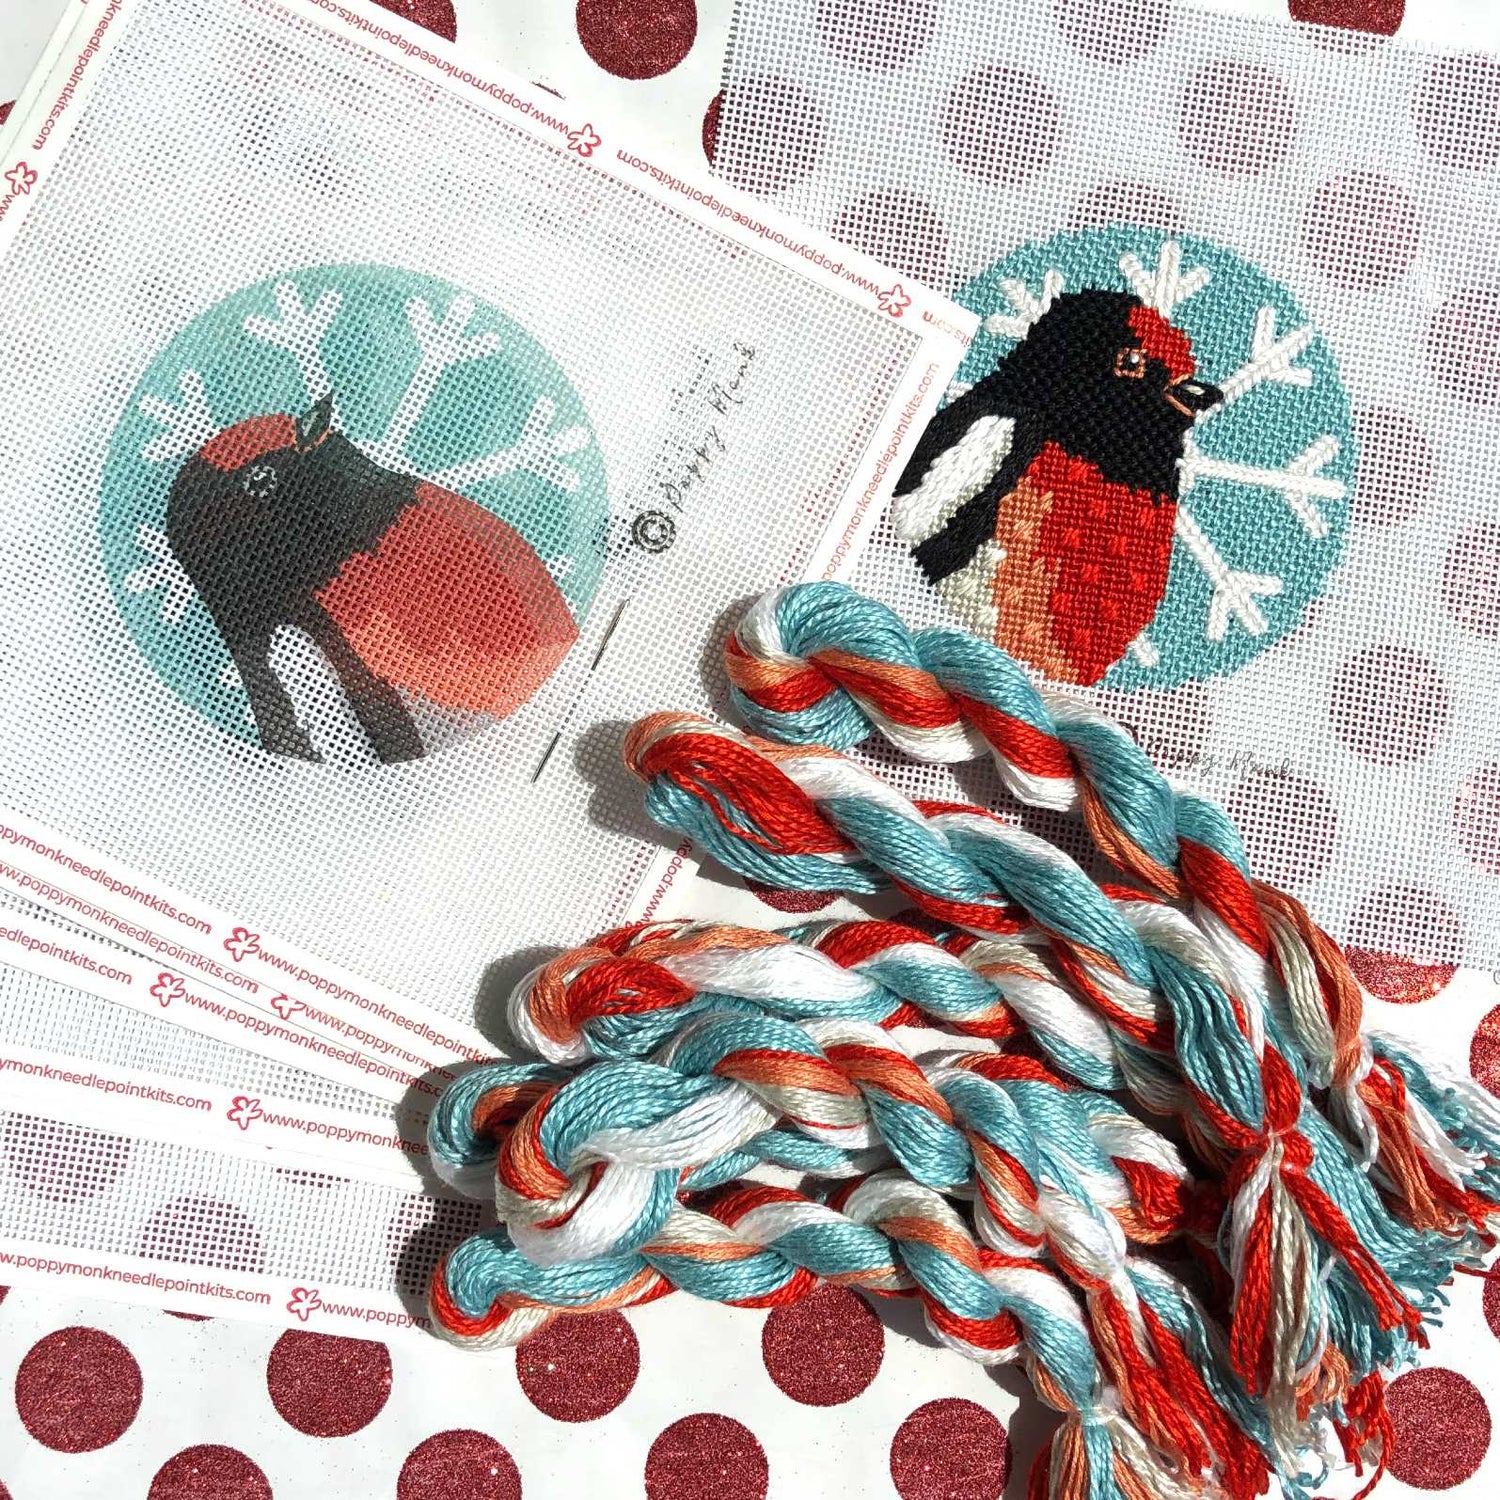 Christmas Robin needlepoint ornament kit